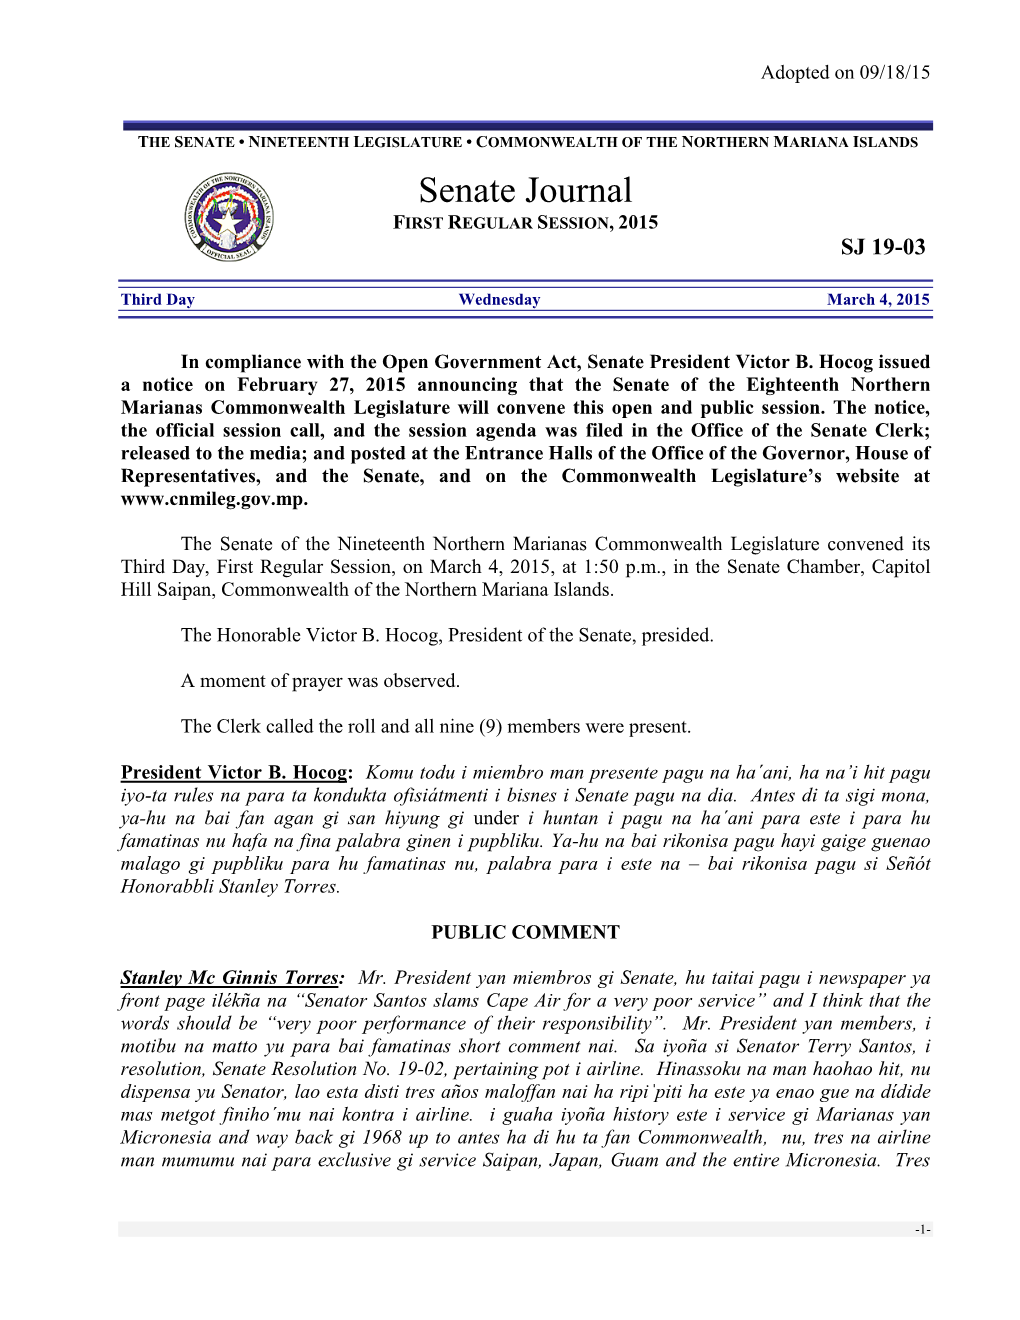 Senate Journal FIRST REGULAR SESSION, 2015 SJ 19-03